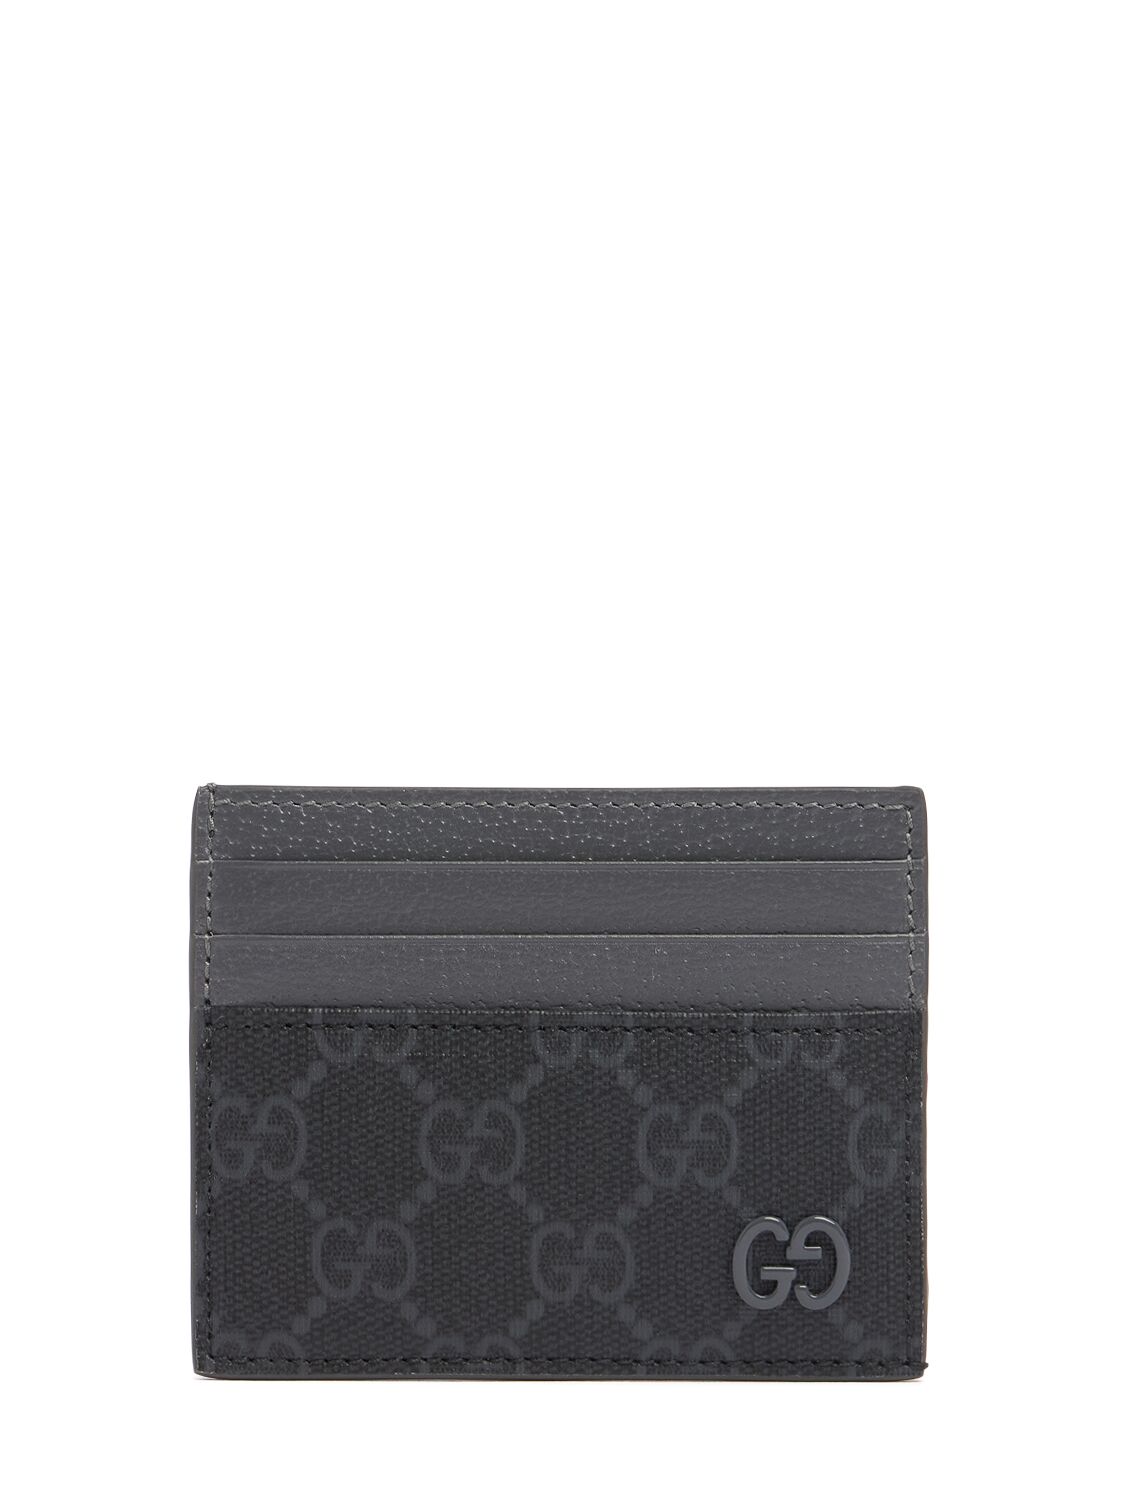 Gucci Bicolor Gg Card Case In Black/grey